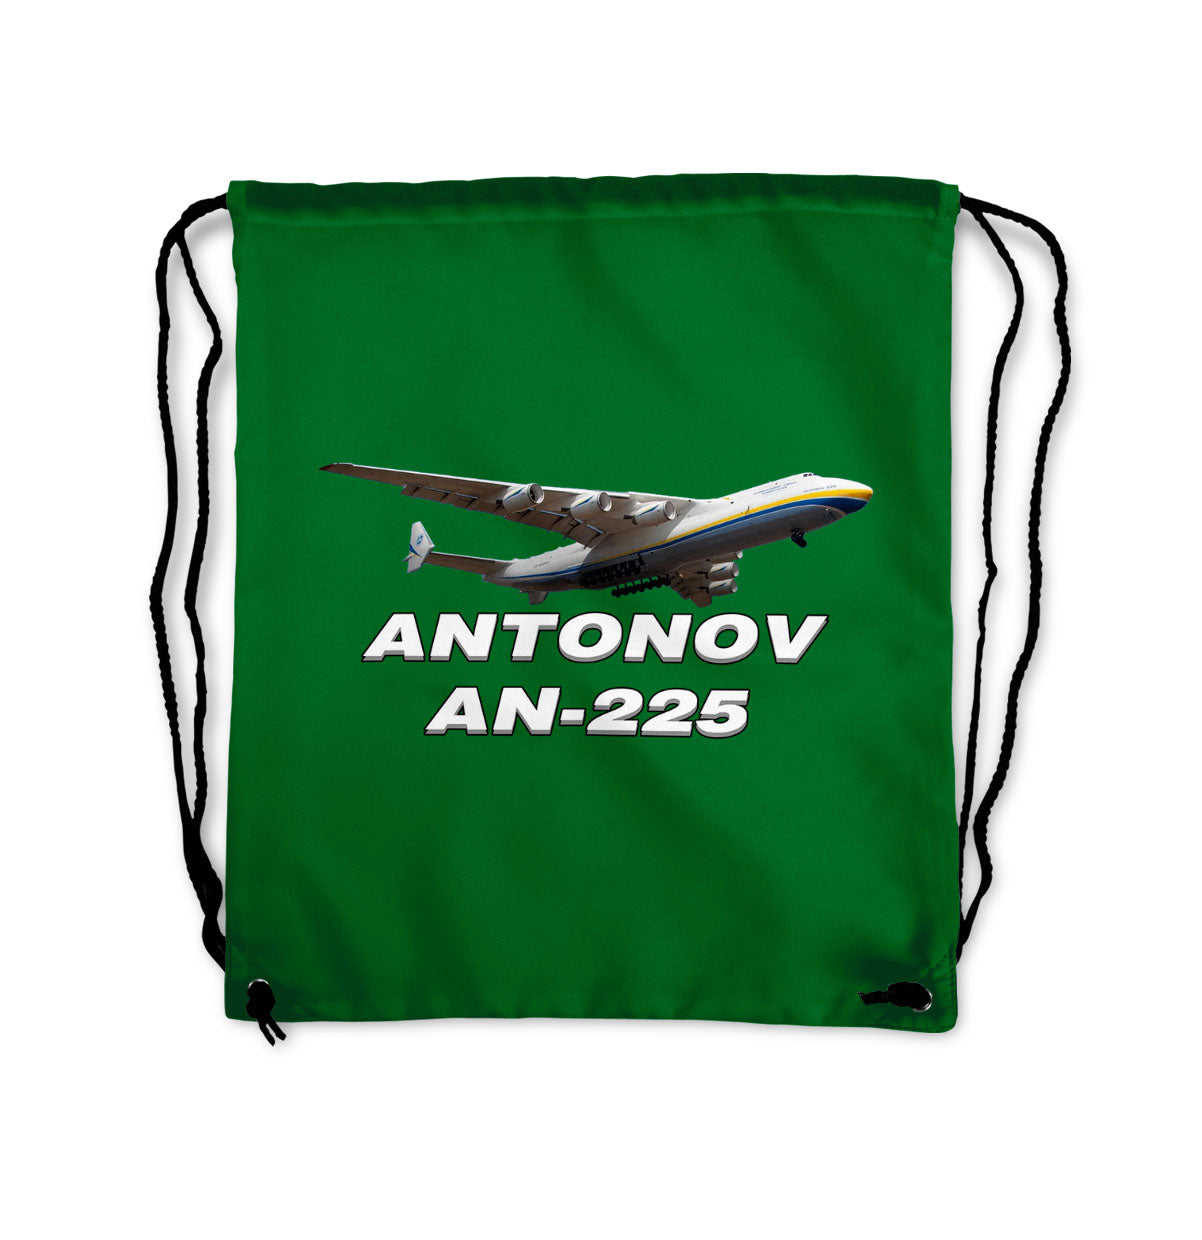 Antonov AN-225 (15) Designed Drawstring Bags